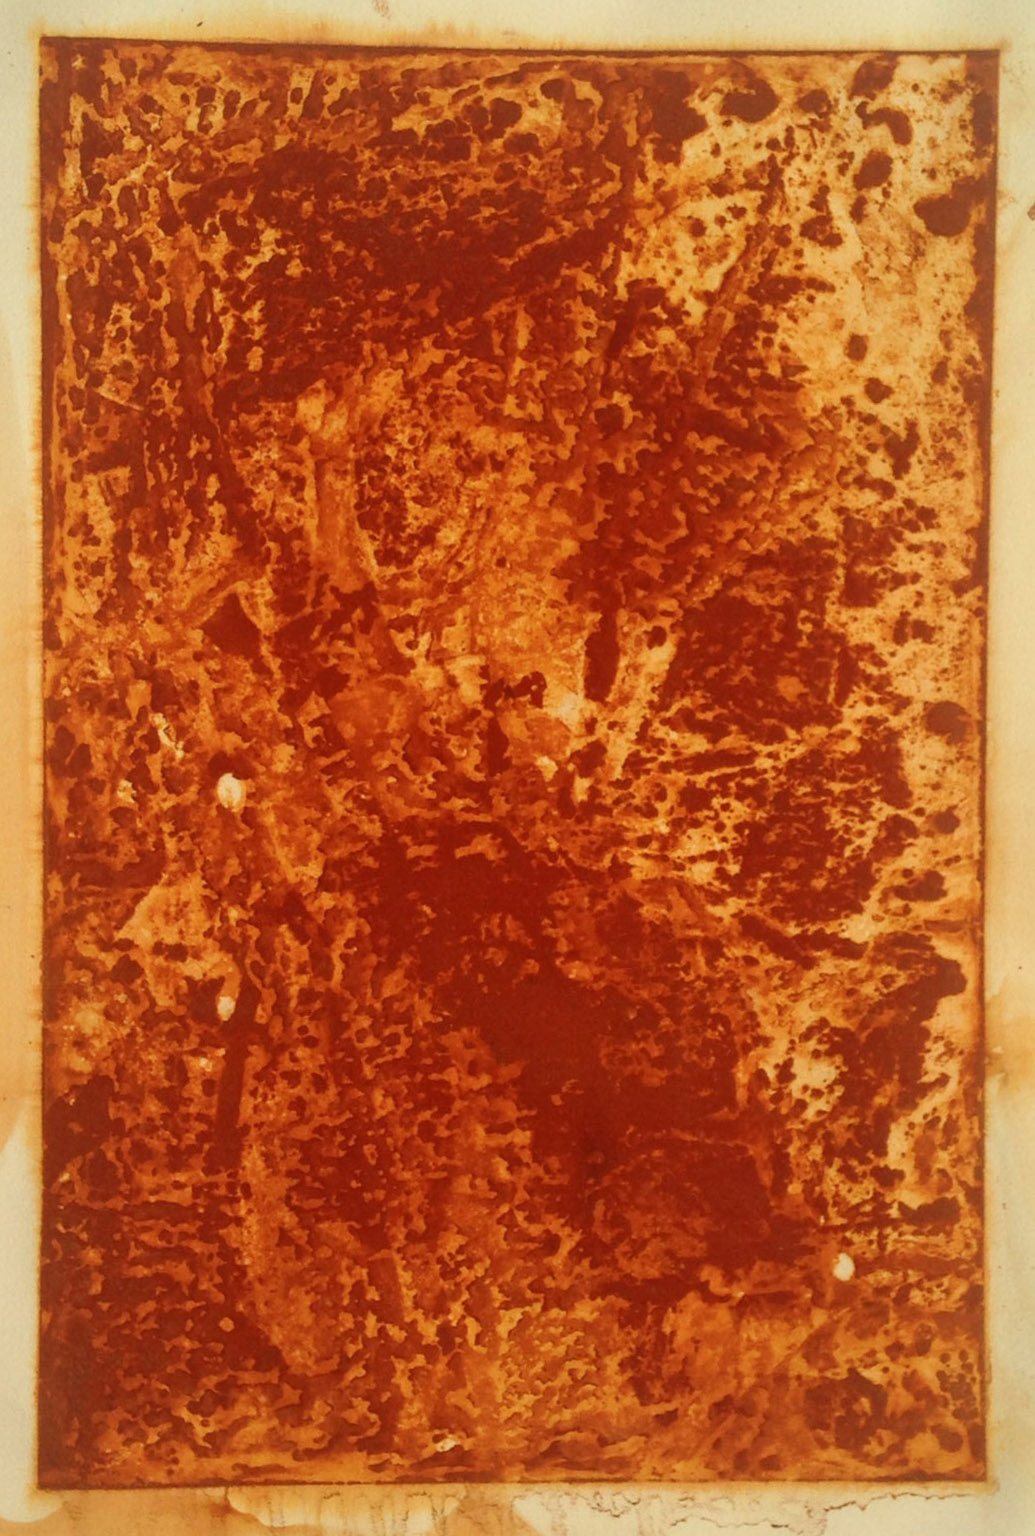   Steel Study I,  2015  Rust on paper 